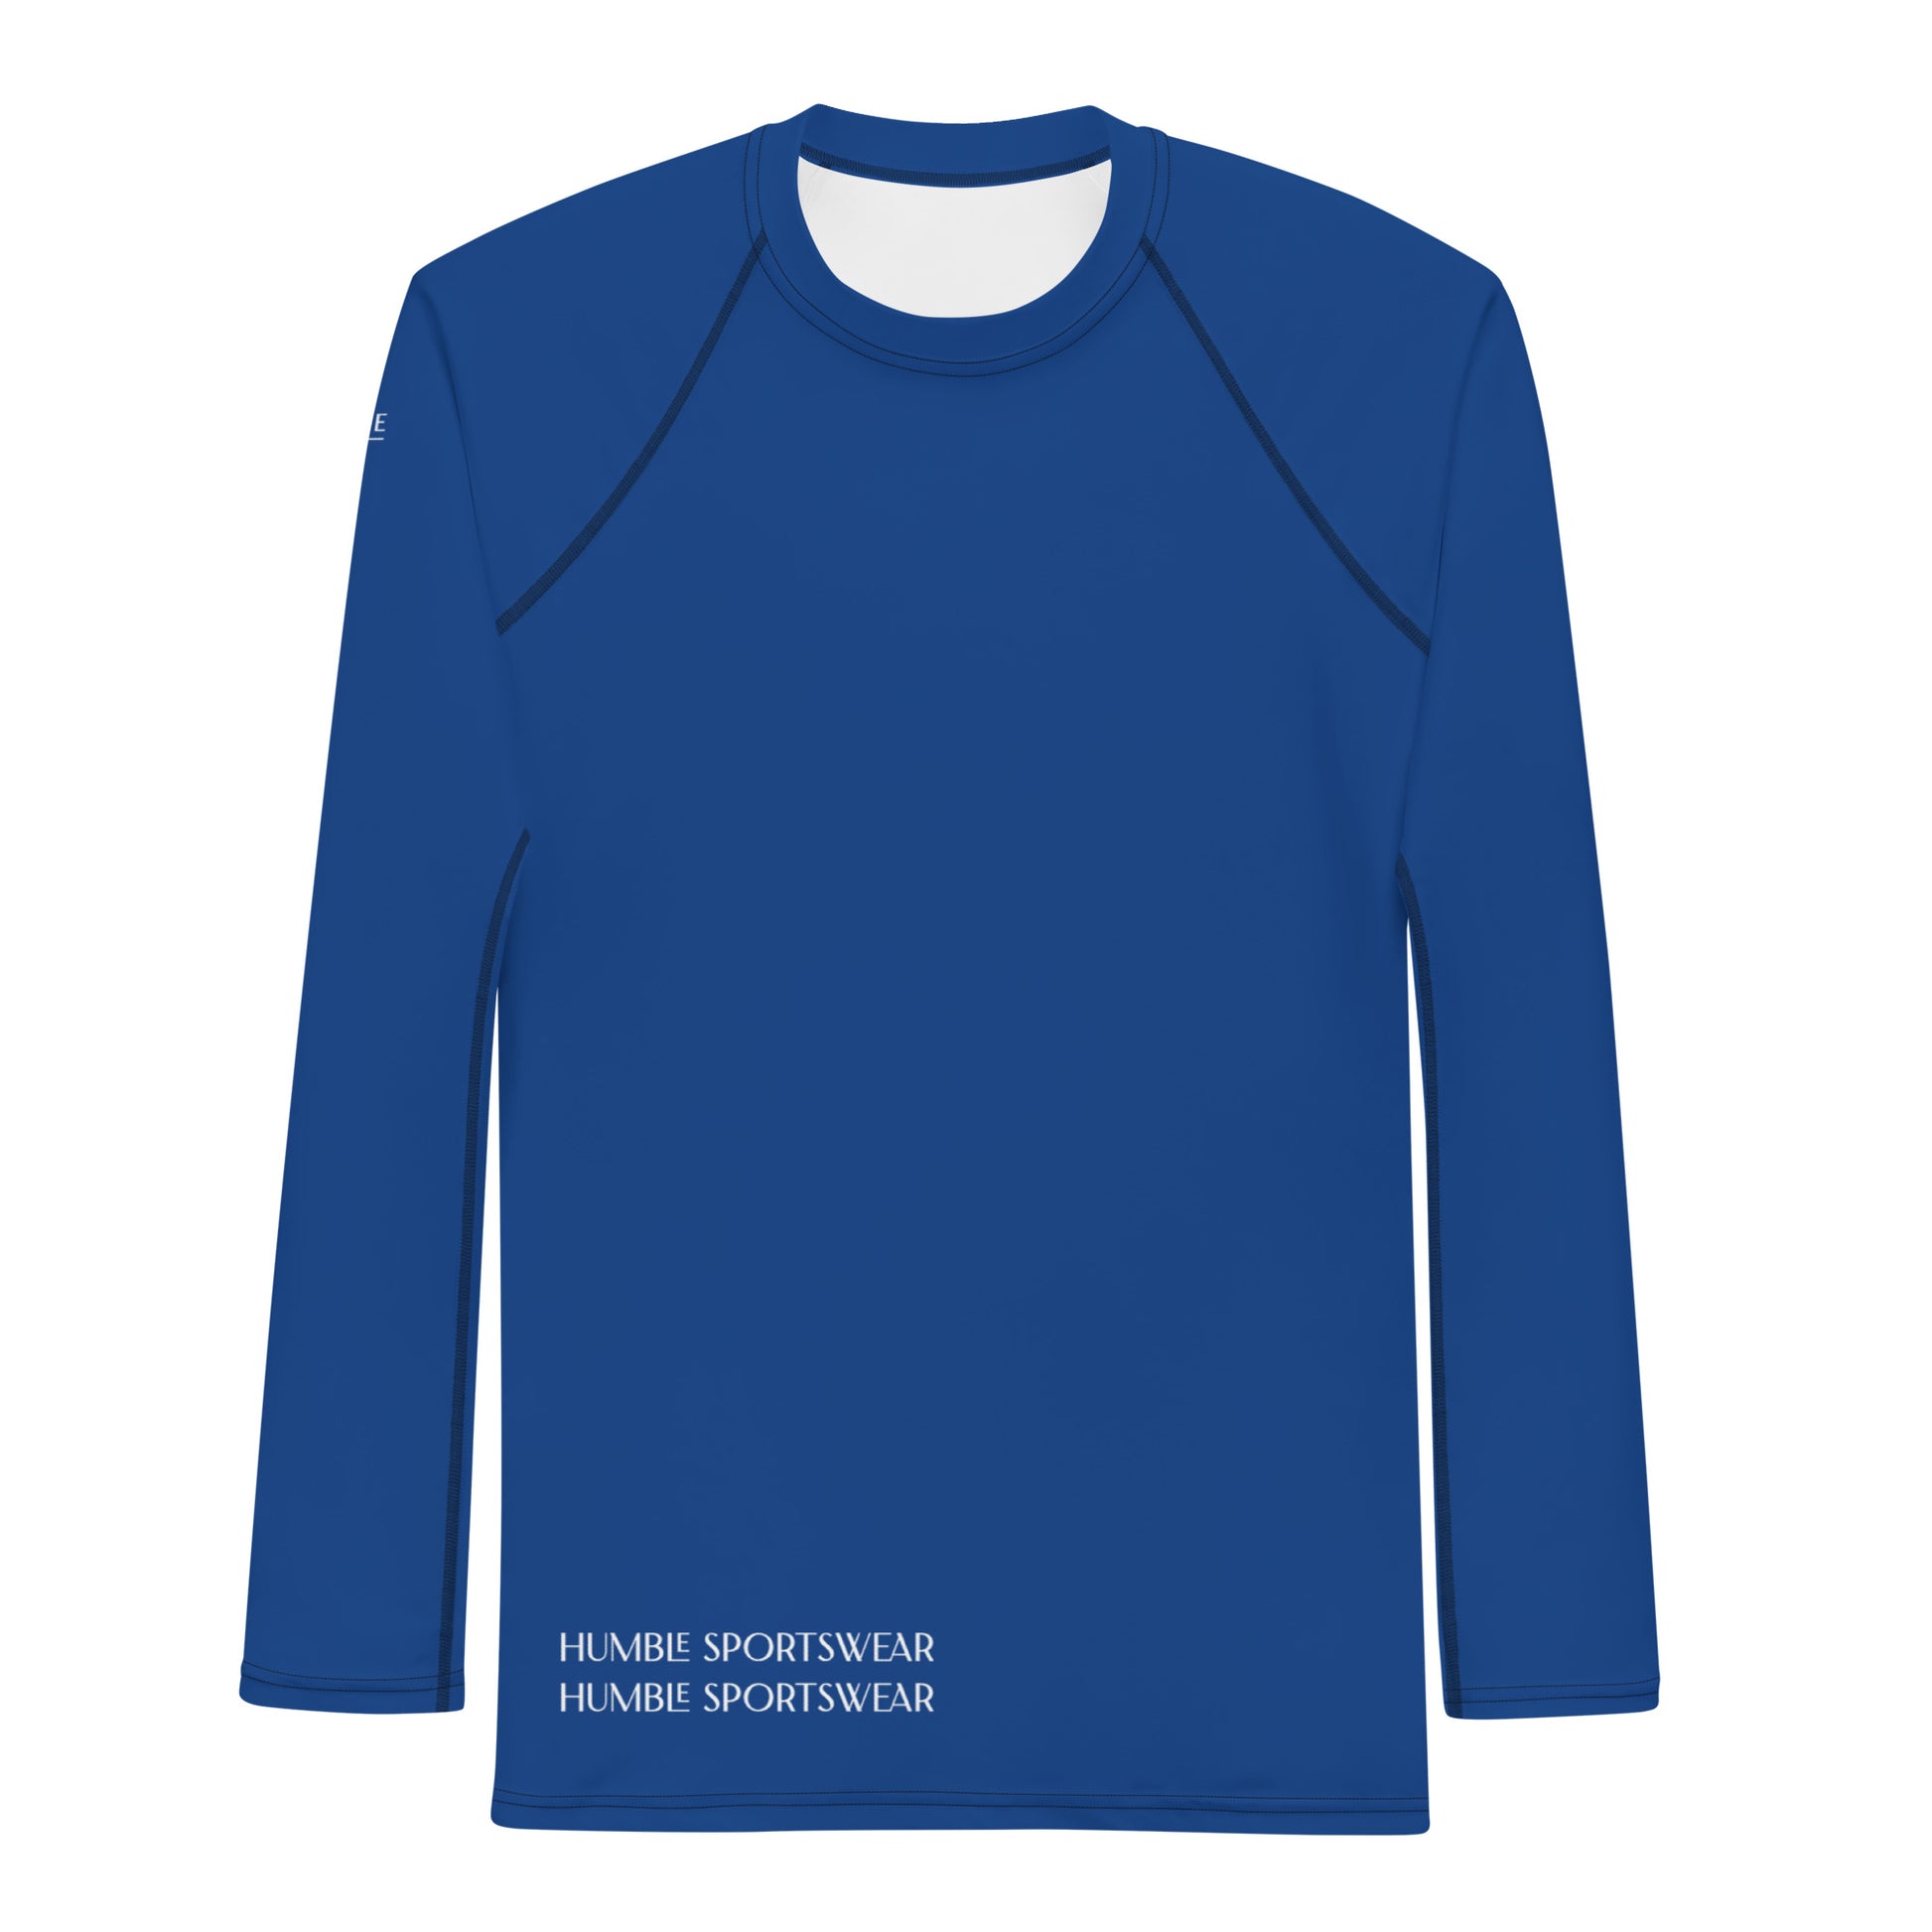 Humble Sportswear™ Men's Cerulean Blue Rash Guard - Mireille Fine Art